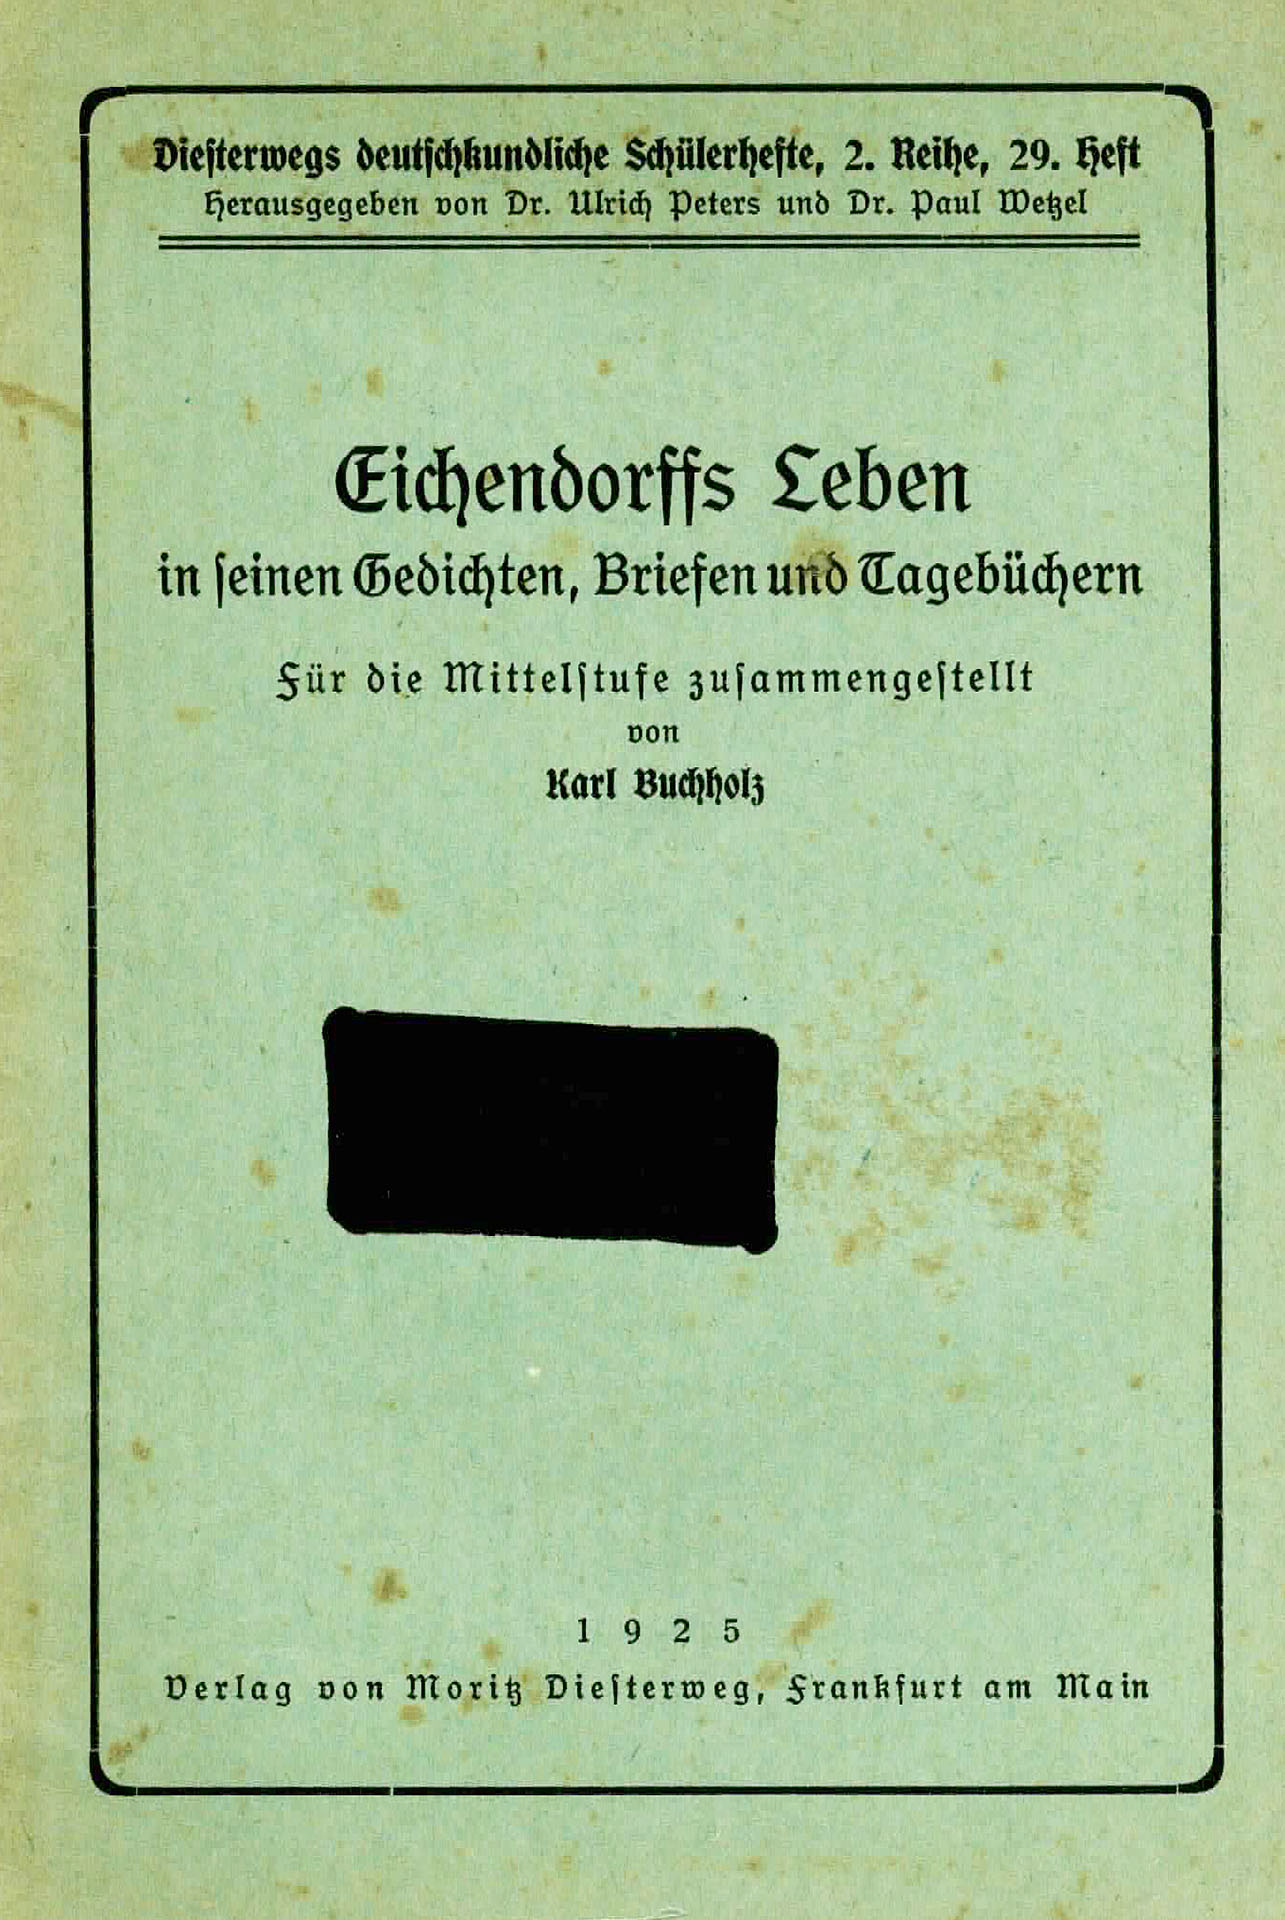 Eichendorfs Leben - Buchholz, Karl